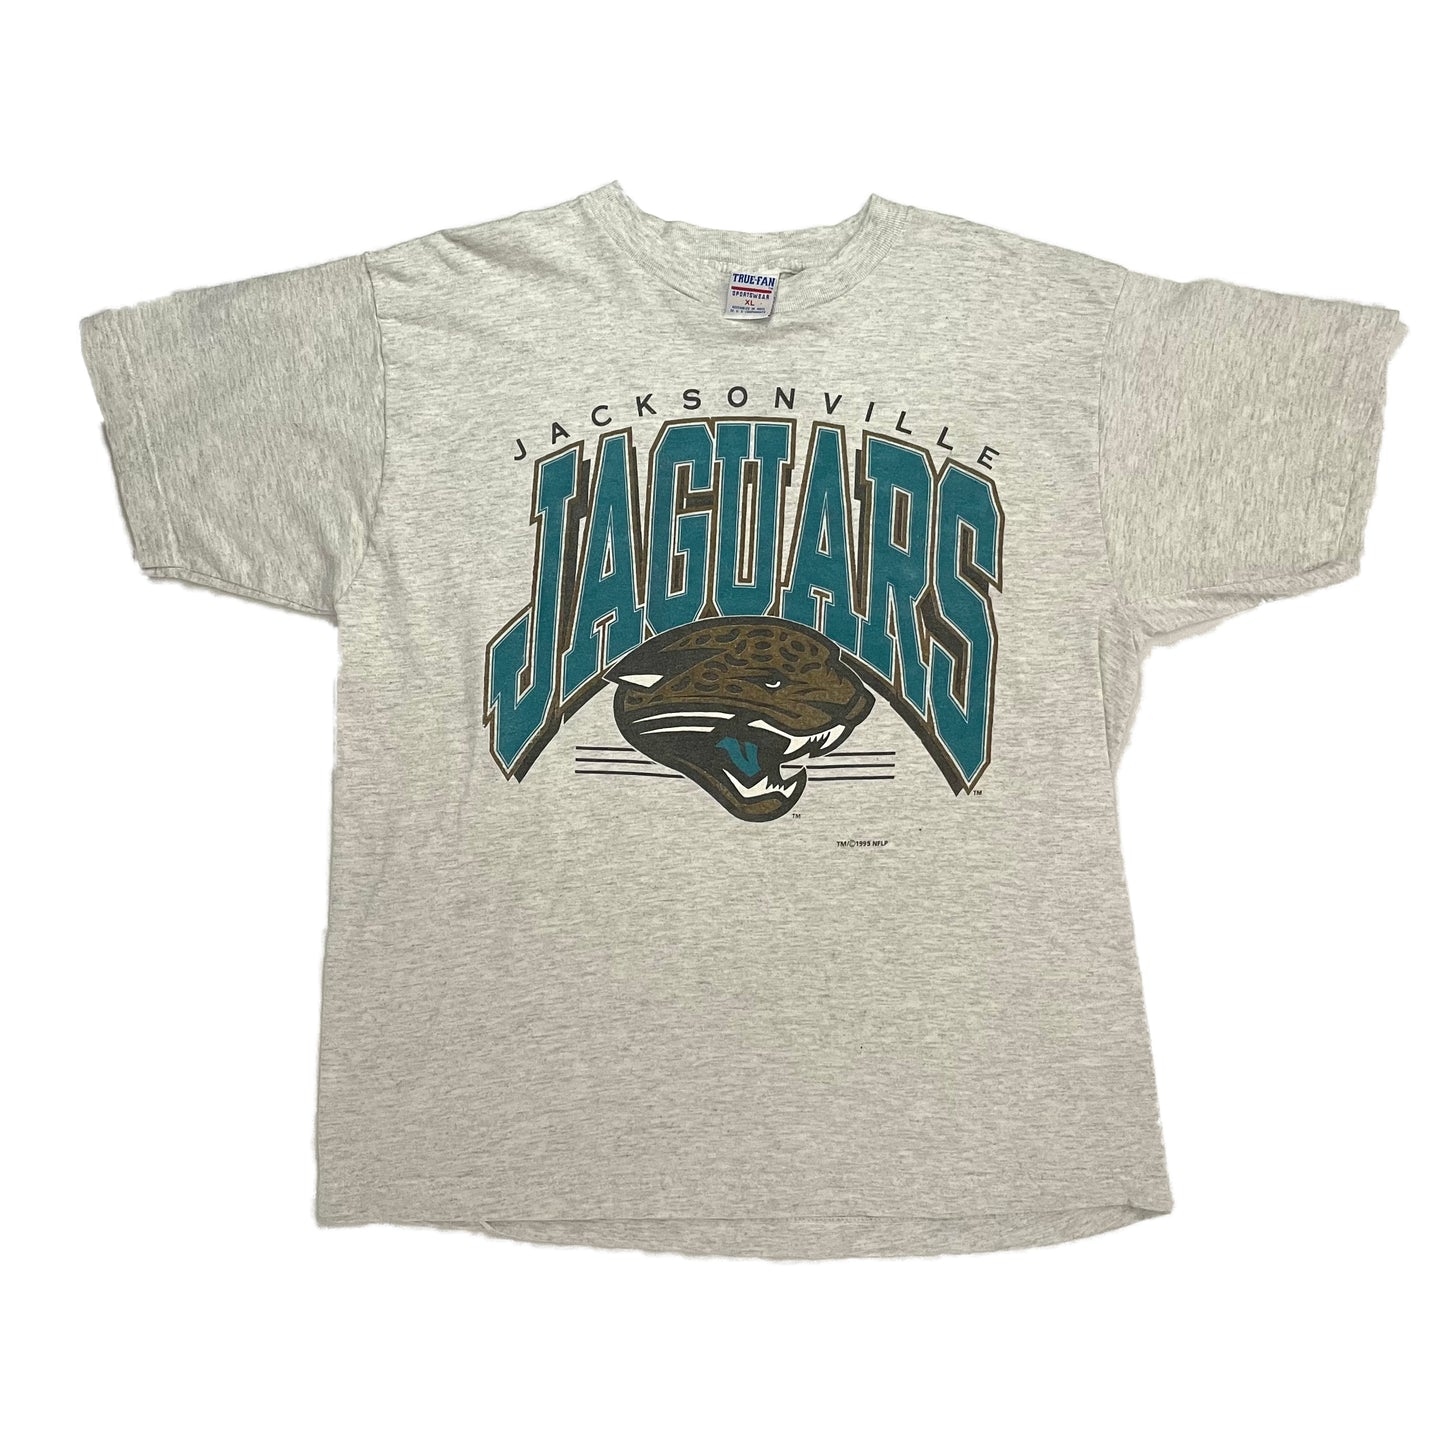 Jacksonville Jaguars shirt